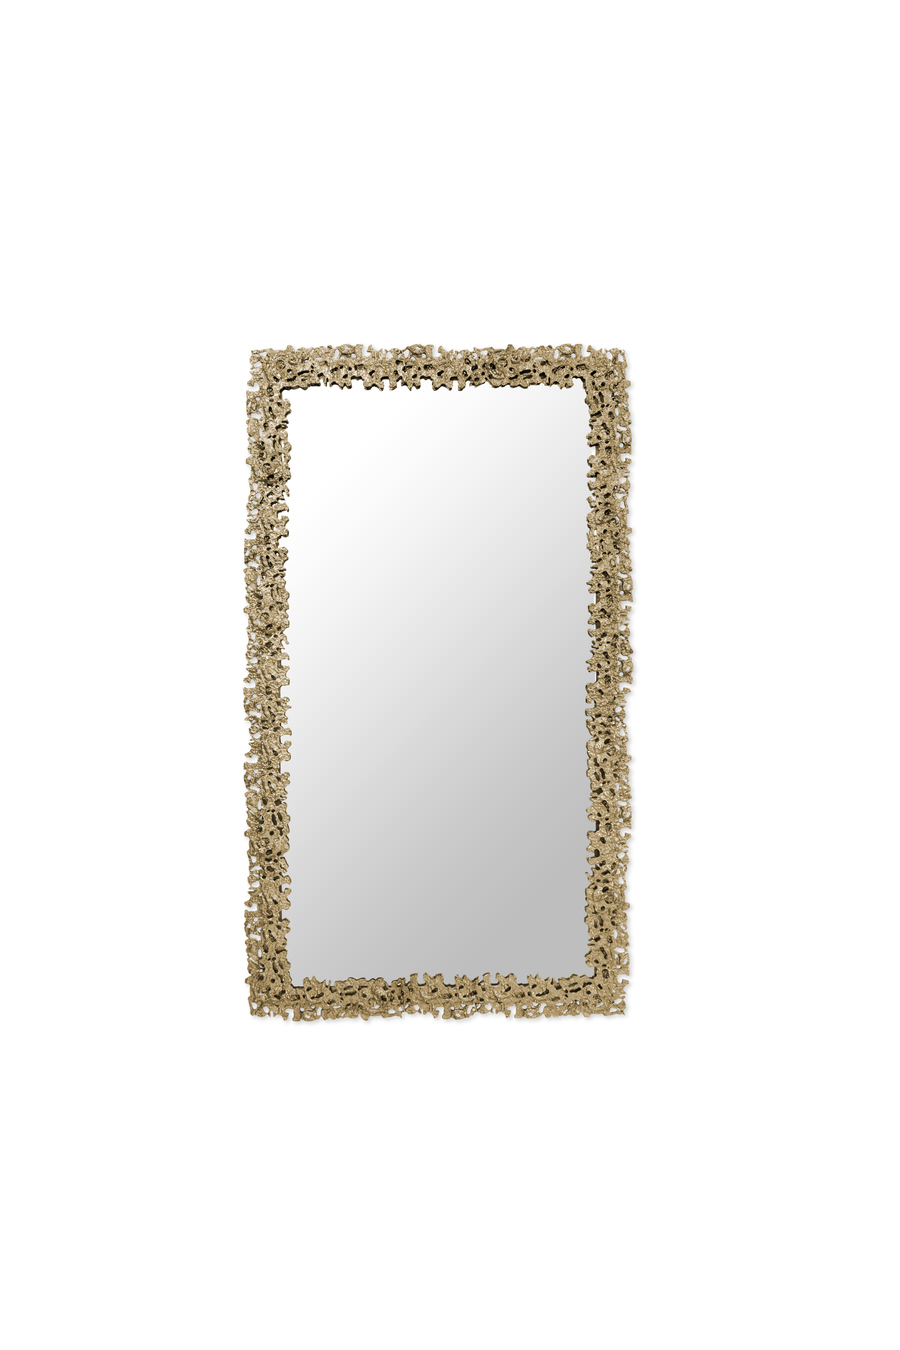 cay rectangle mirror at iSaloni 22